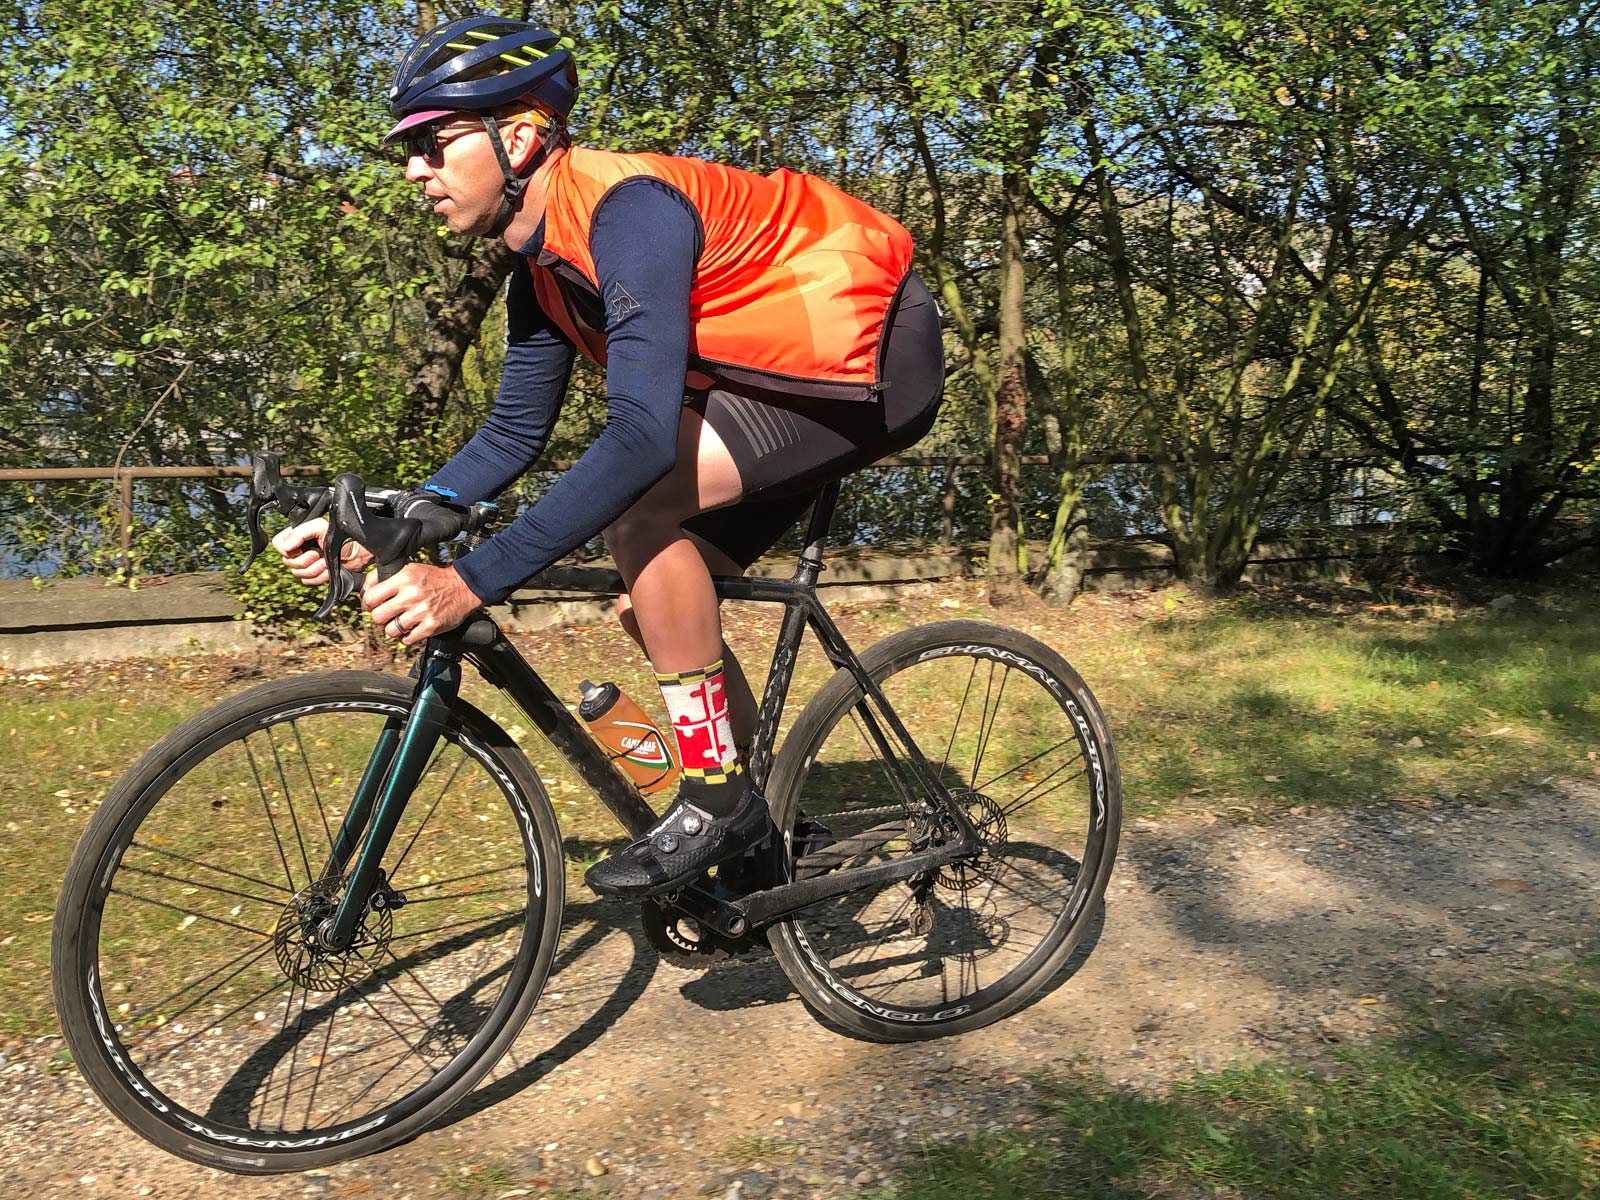 Podia Navy & Olive Merino, Podia Merino lightweight long sleeve Smartwool wool blend cycling jersey